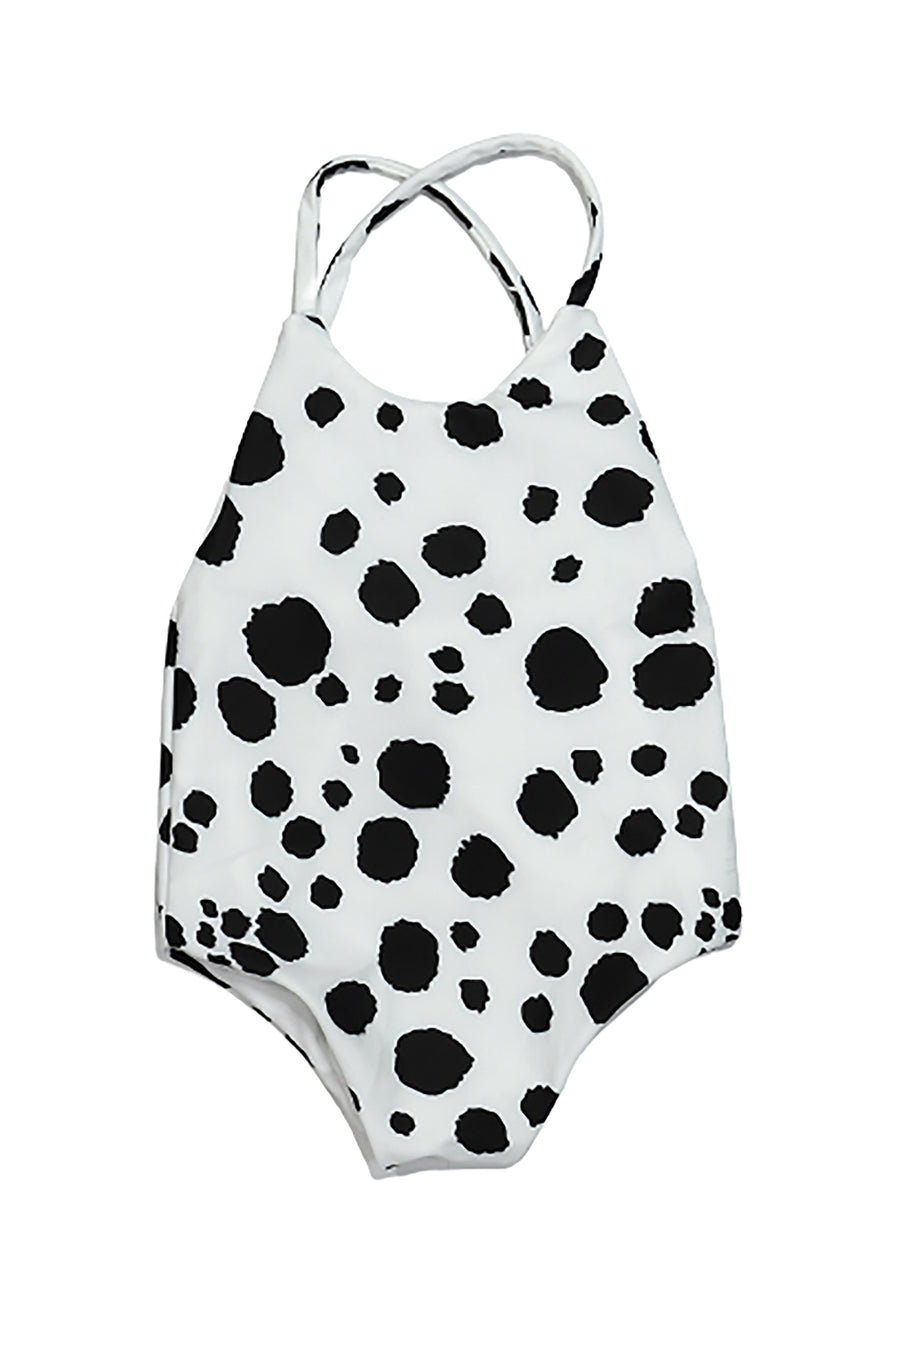 ESTELLE swimsuit Dalmatian - HOLY SHE - HOWTOKiSSAFROG